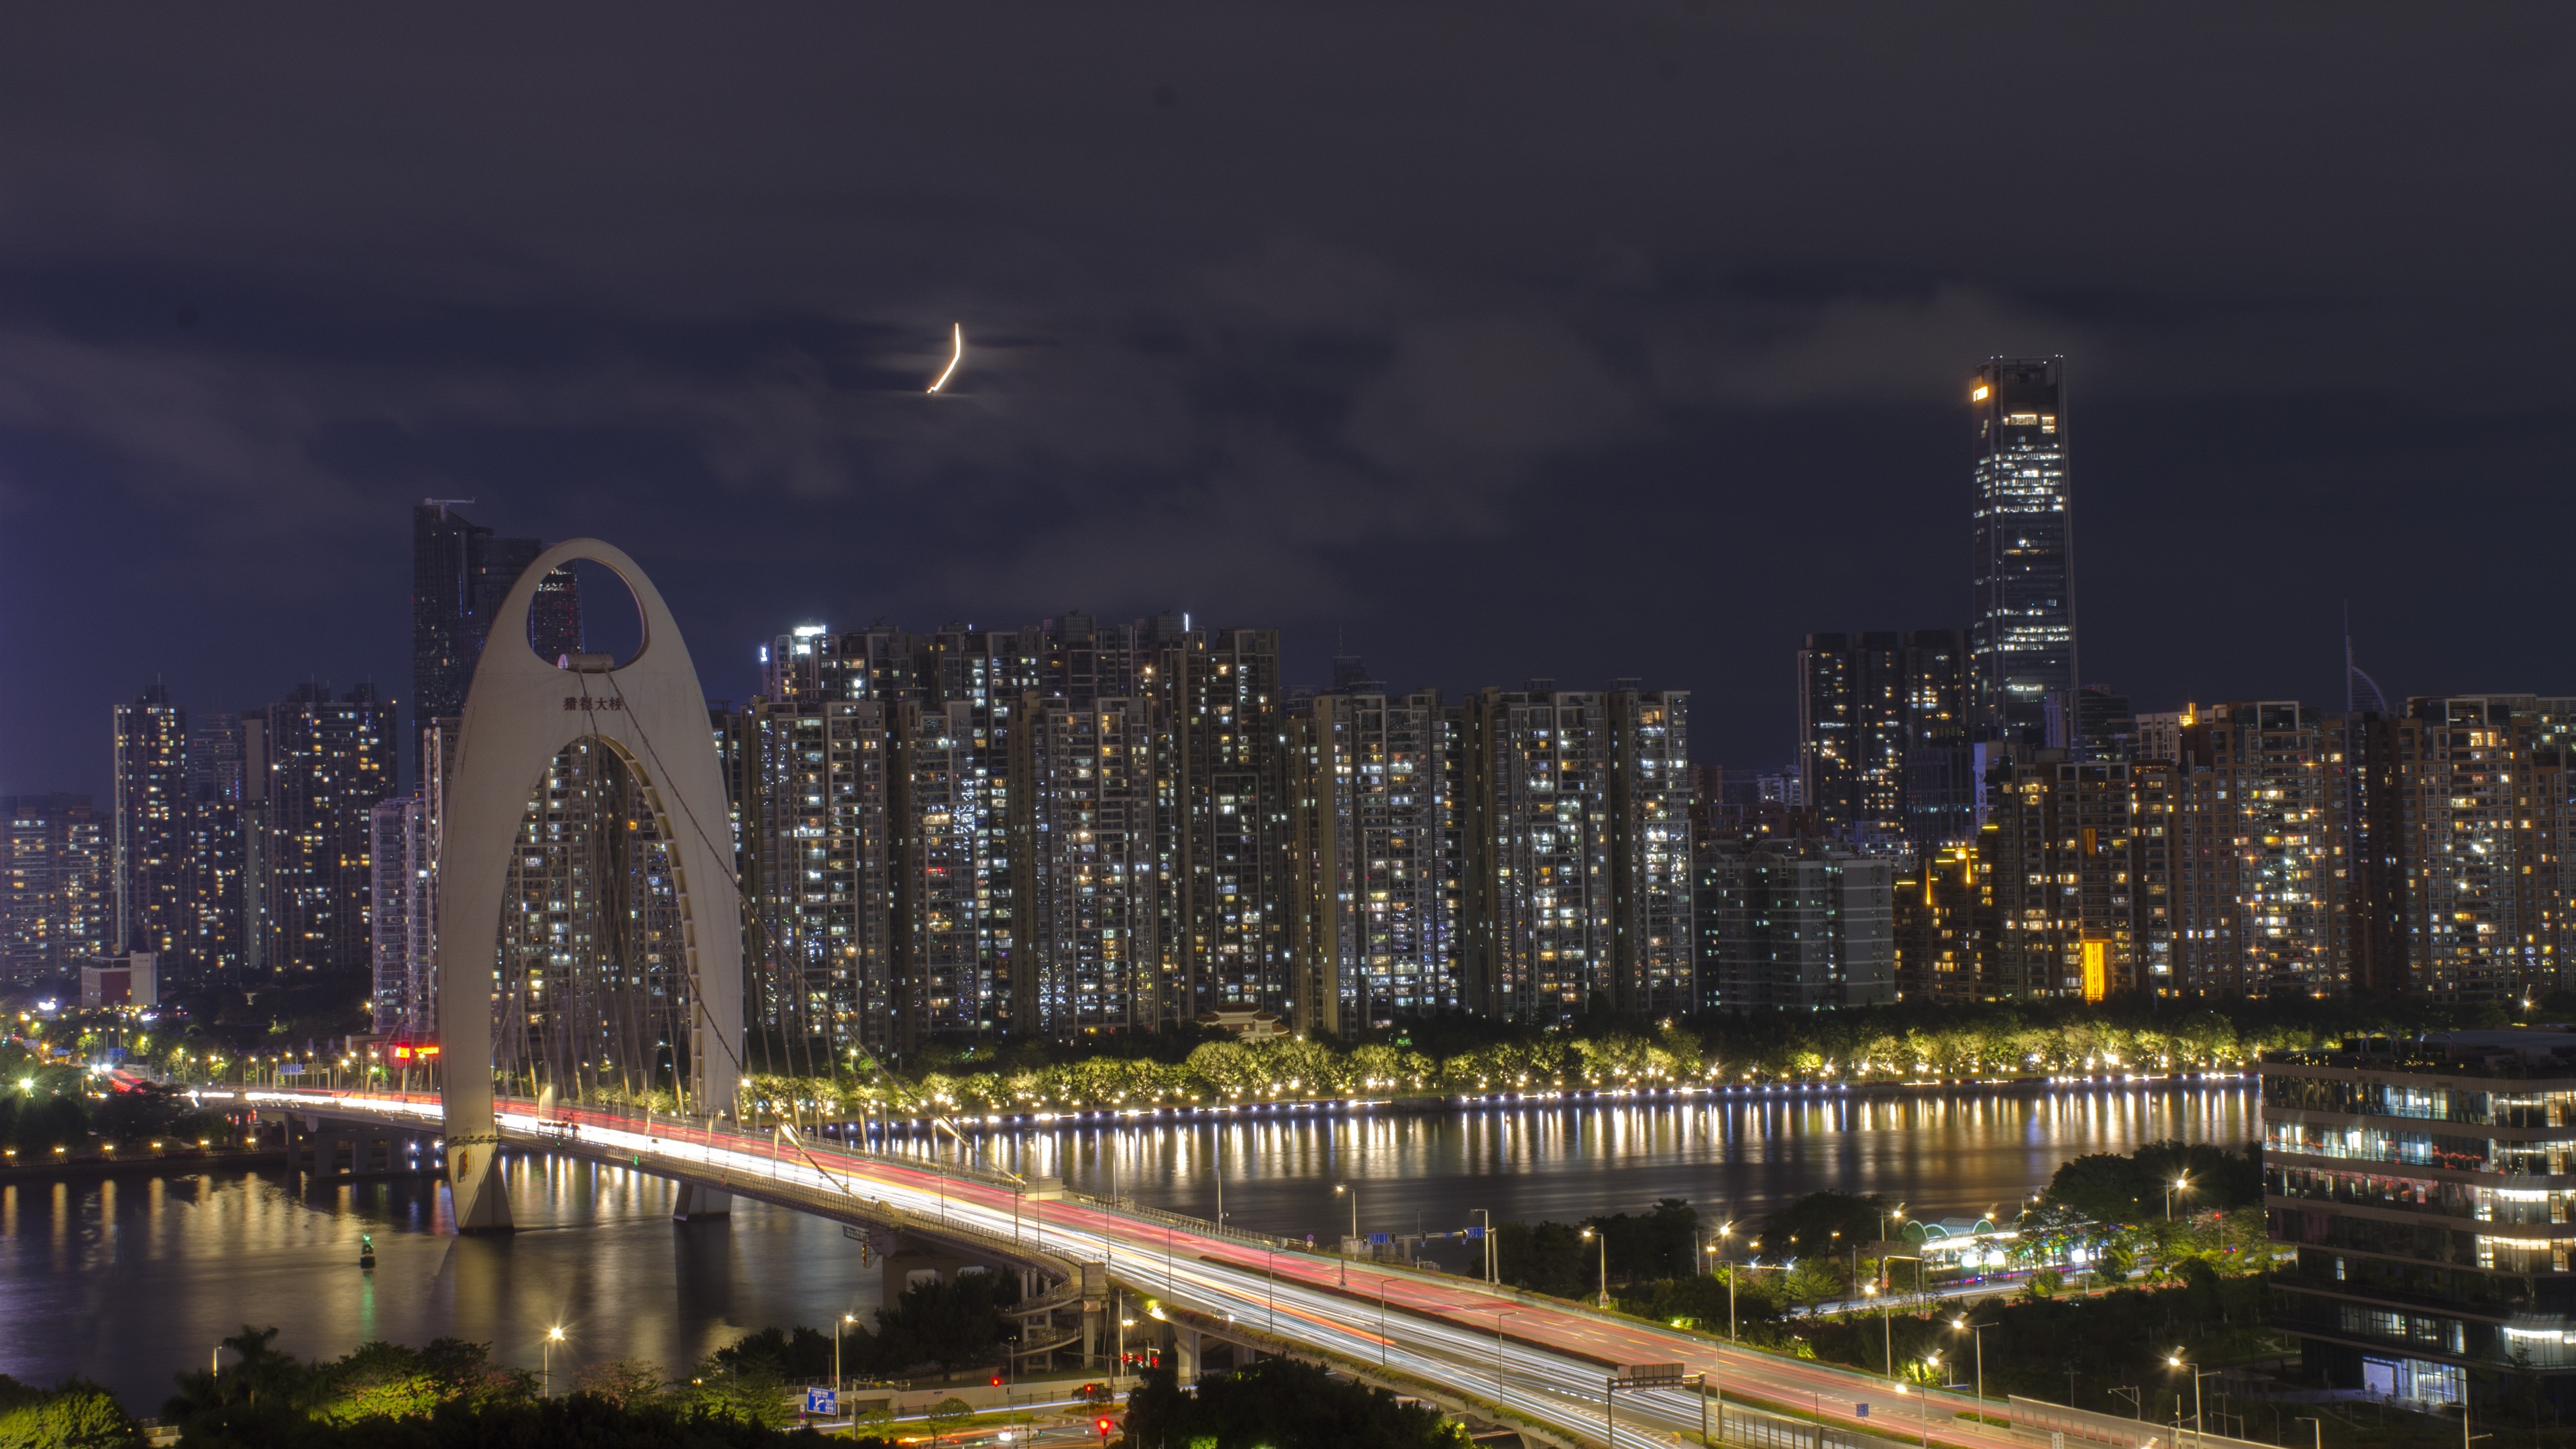 Wallpaper Liede Bridge Guangzhou skyscrapers lights river